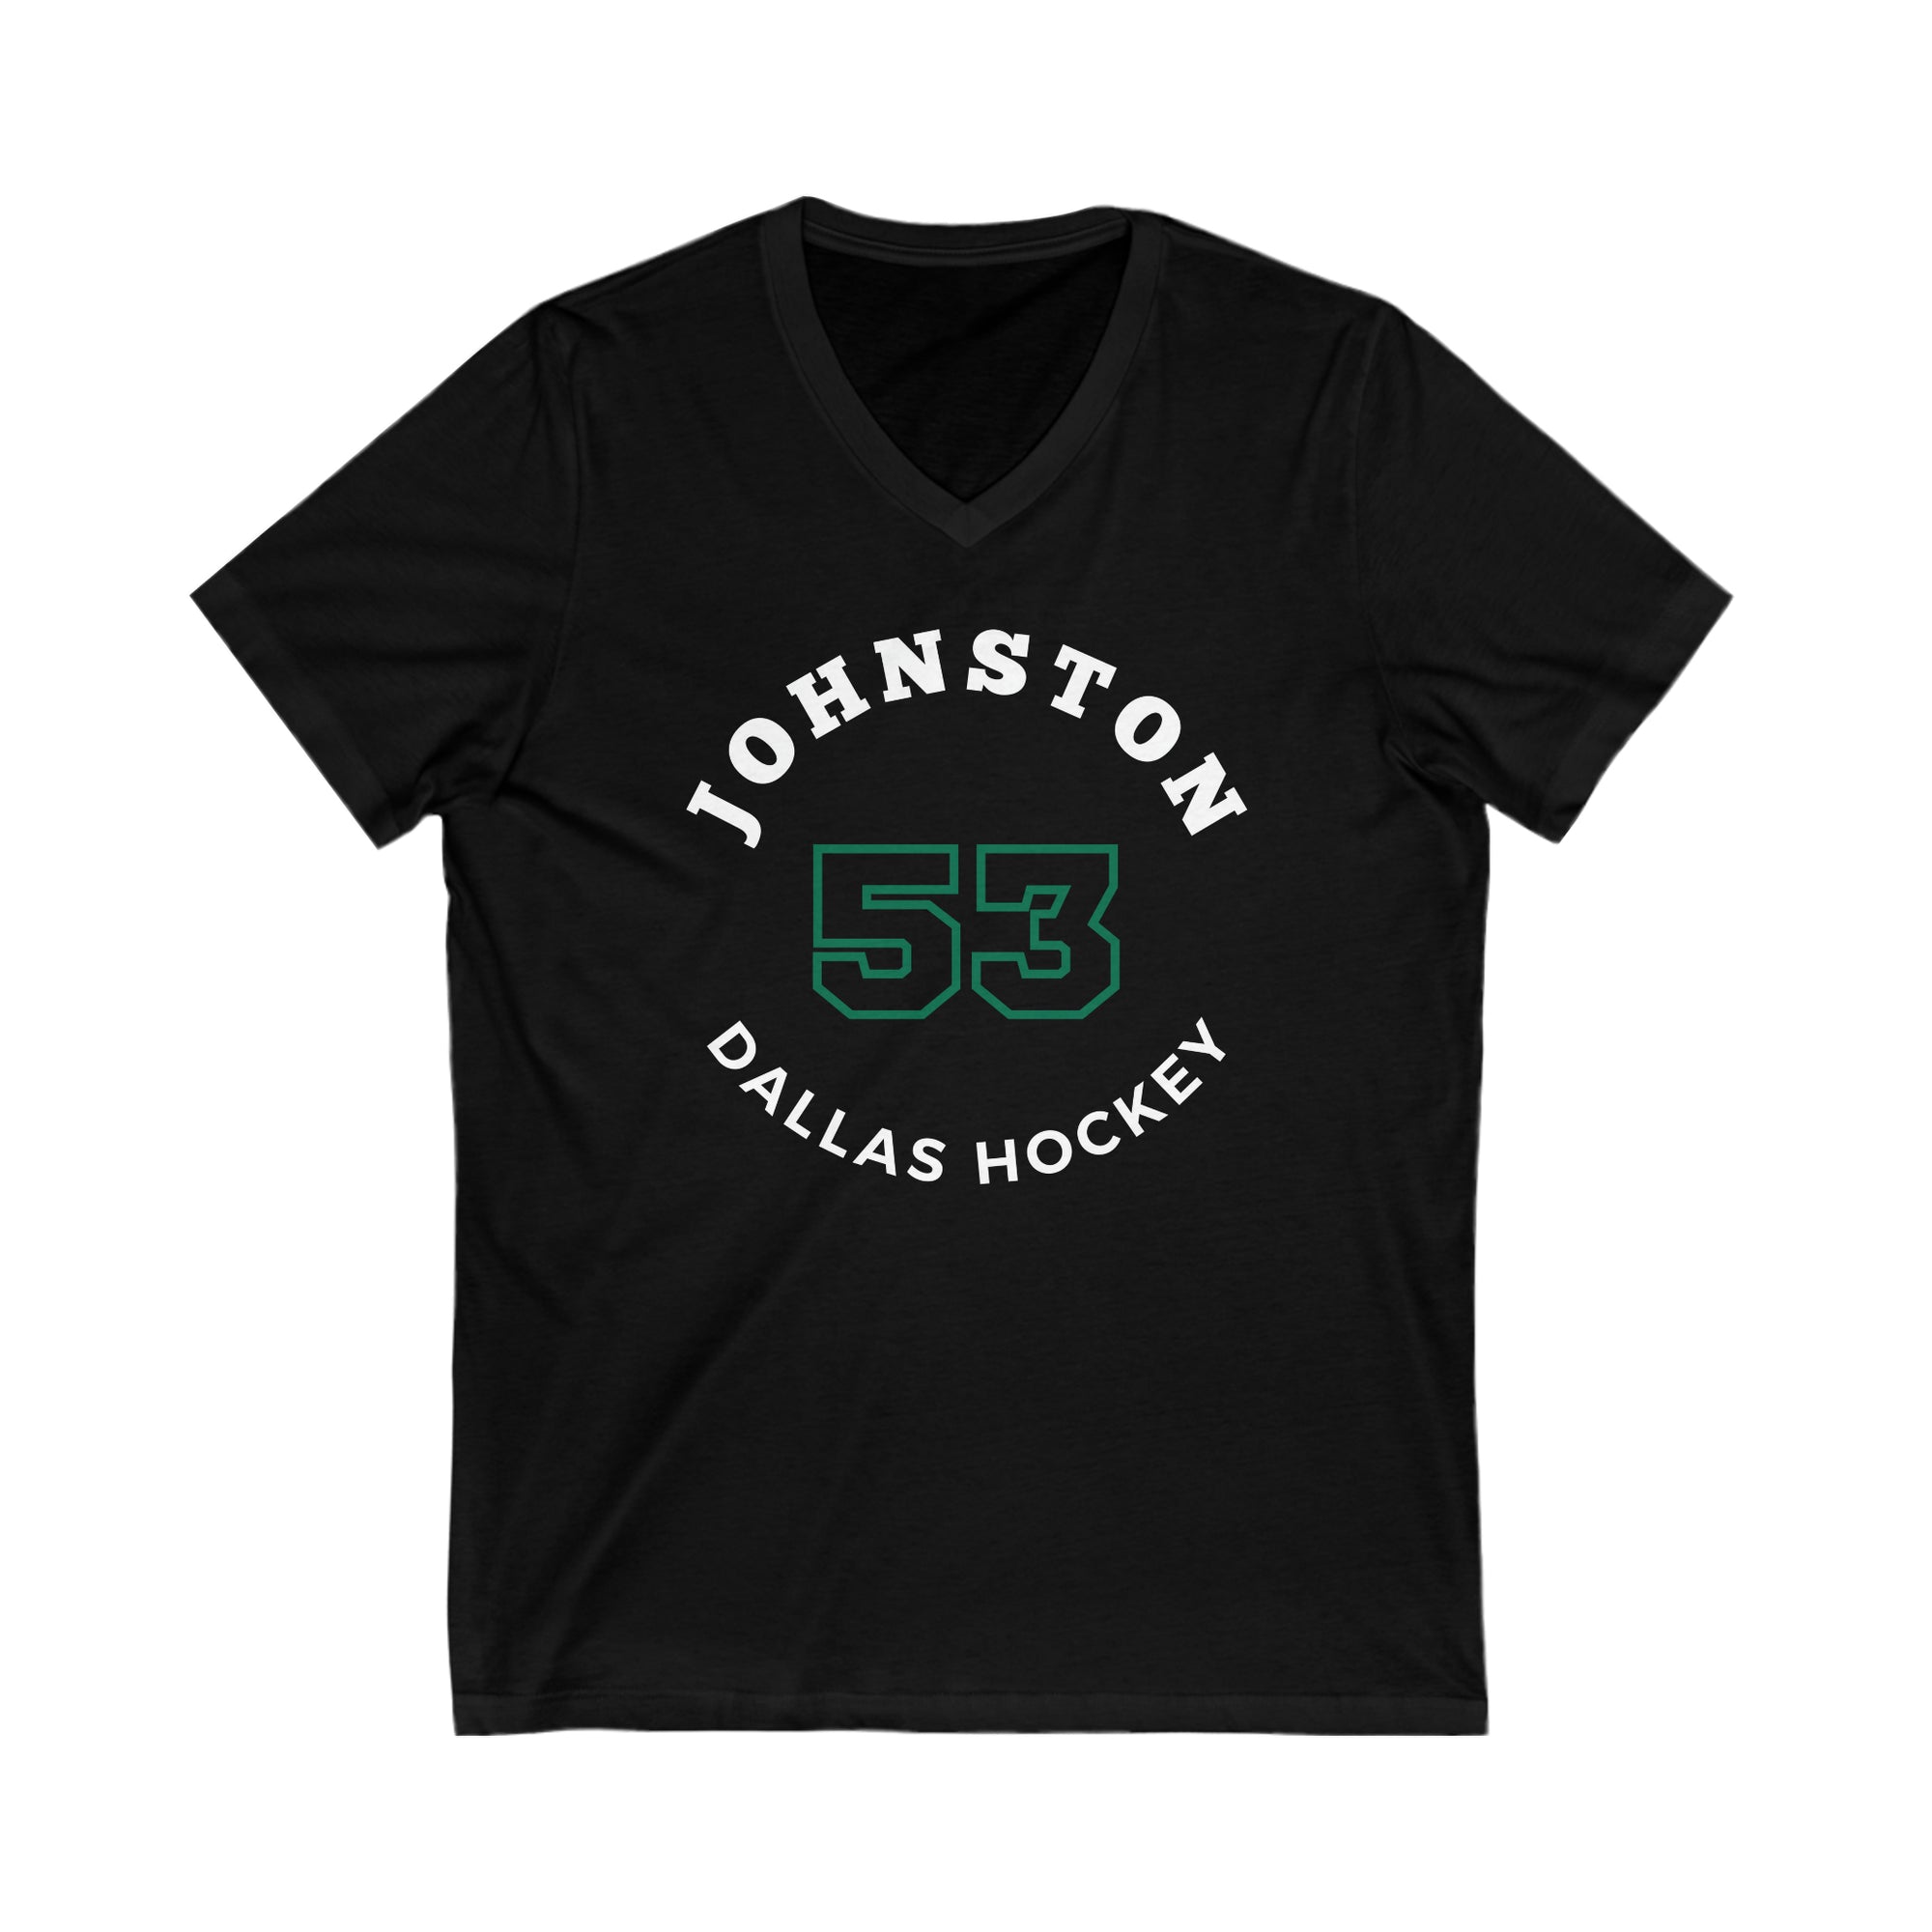 Johnston 53 Dallas Hockey Number Arch Design Unisex V-Neck Tee